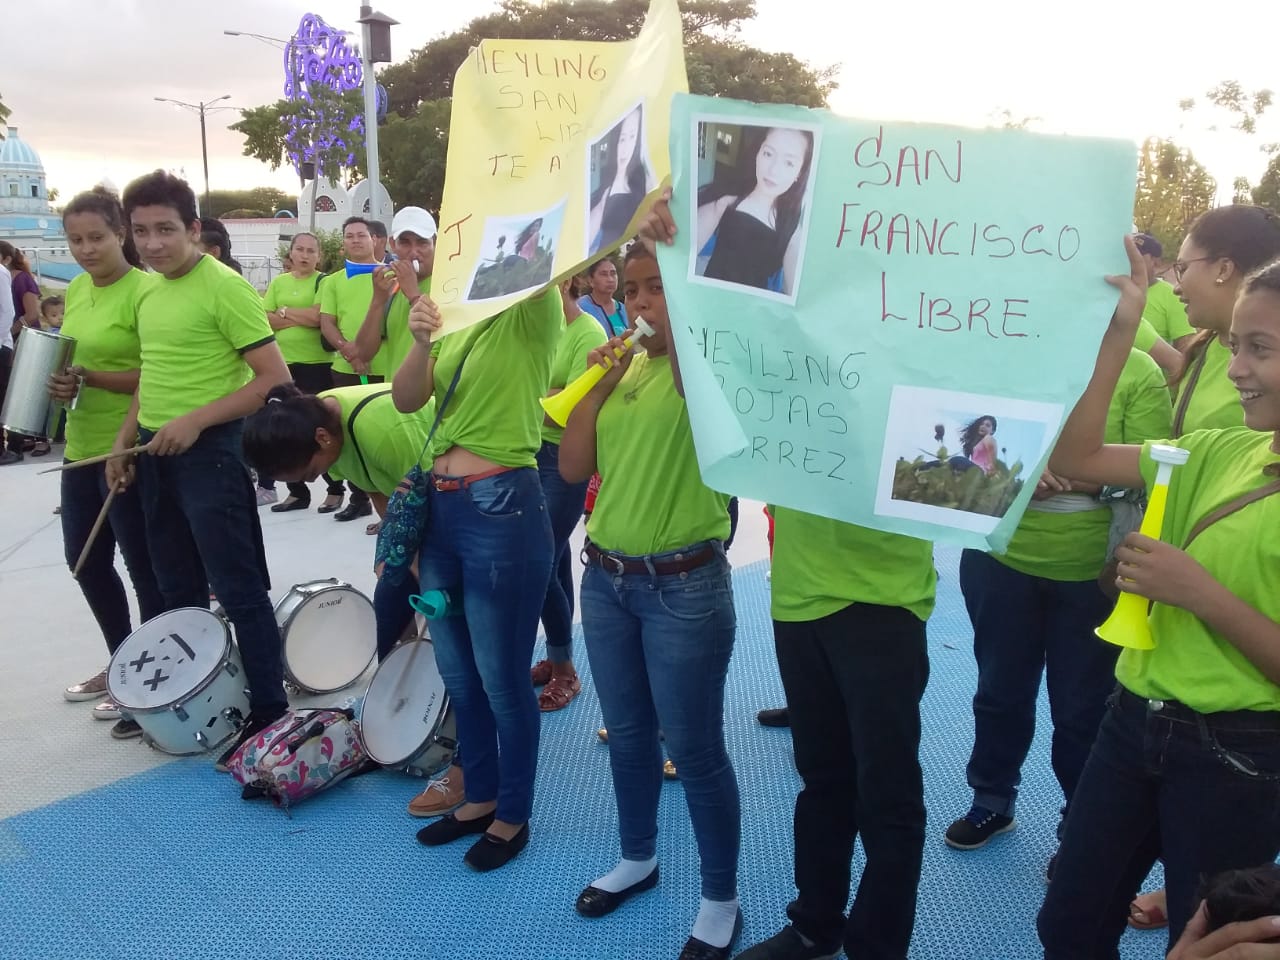 Managua elige a su reina "Nicaragua Siempre Linda" en Plaza de Colores